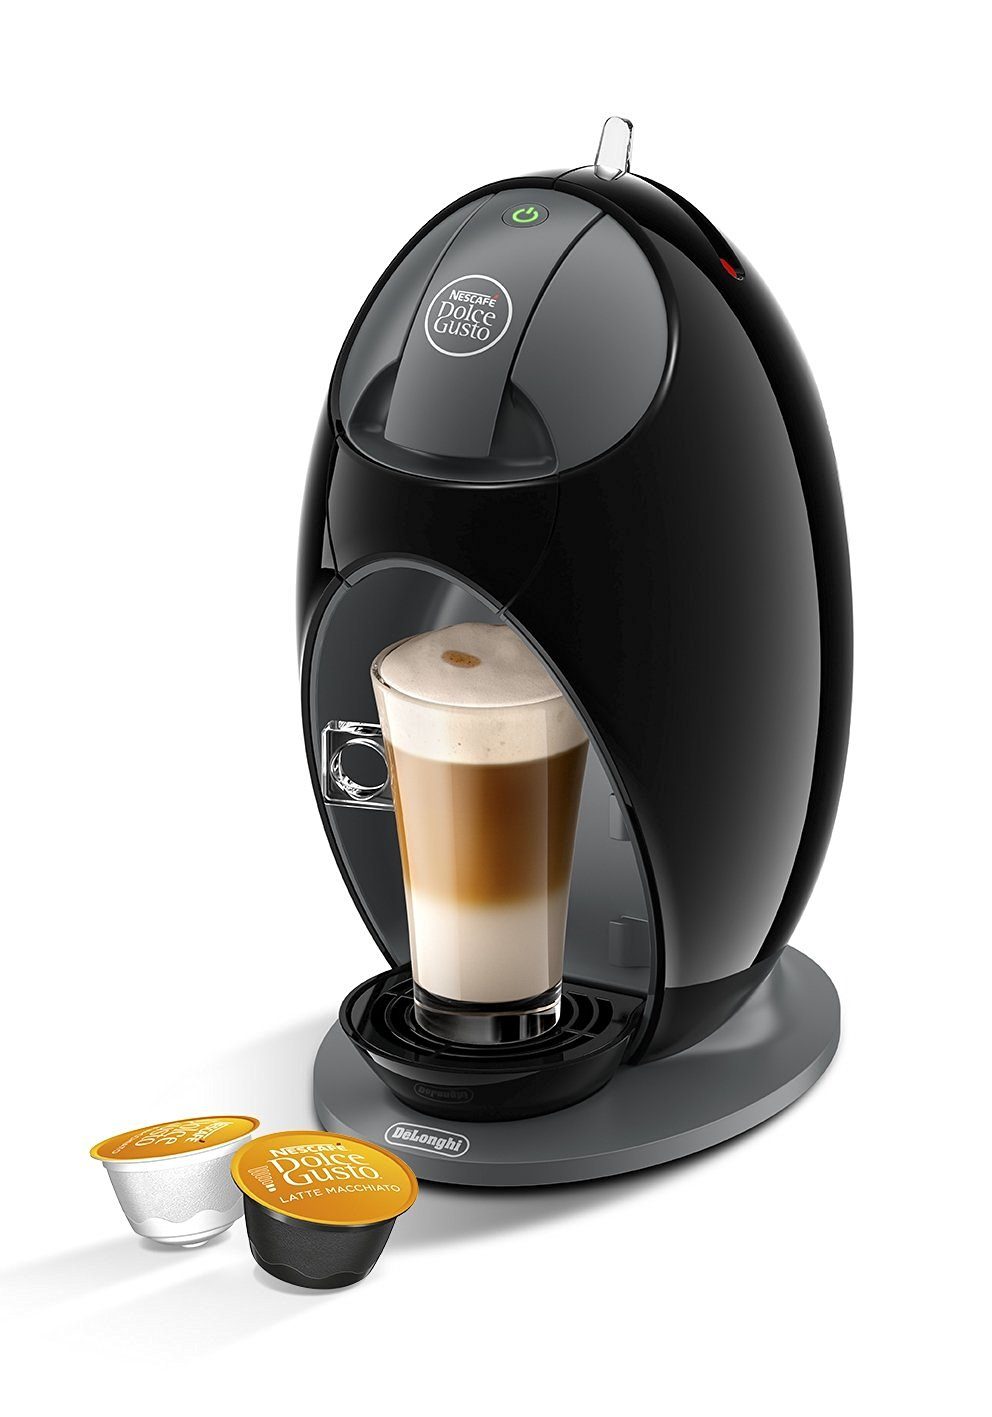 Nescafé Dolce Gusto Coffee Machine UK Review